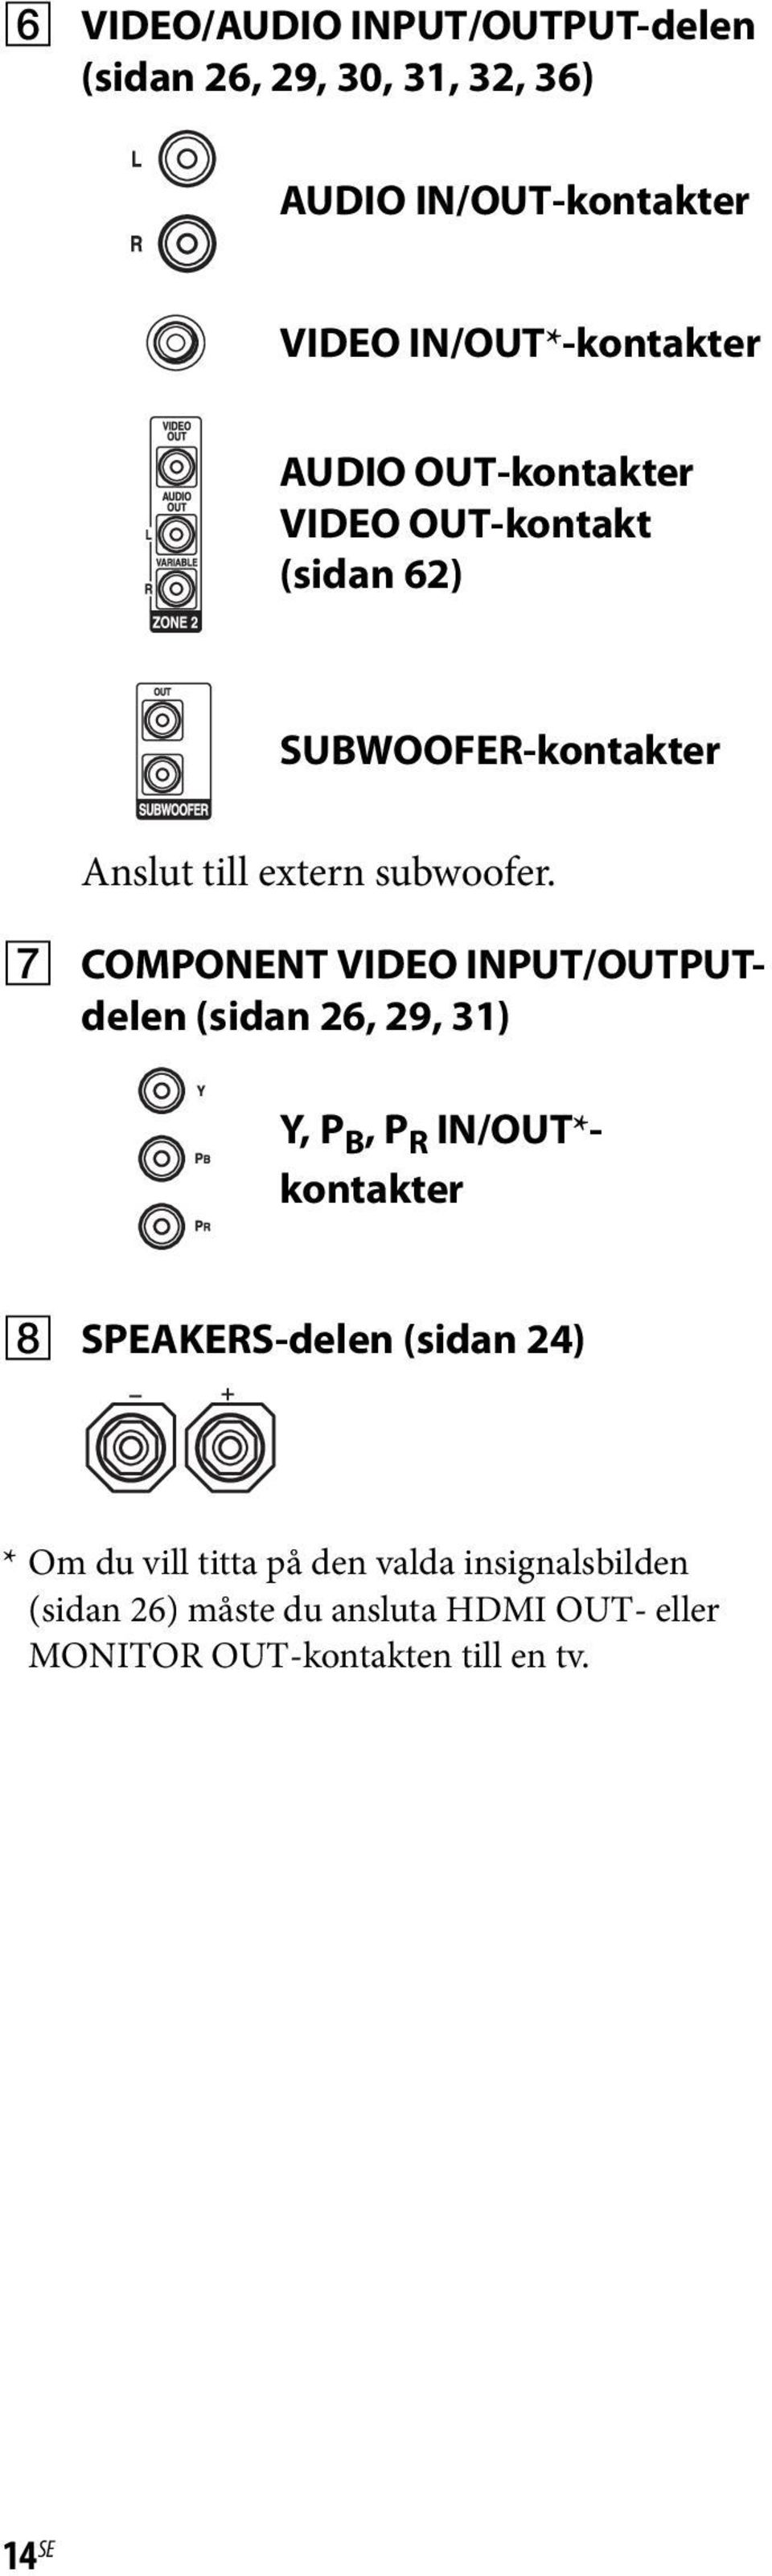 G COMPONENT VIDEO INPUT/OUTPUTdelen (sidan 26, 29, 31) Y, P B, P R IN/OUT*- kontakter H SPEAKERS-delen (sidan 24)